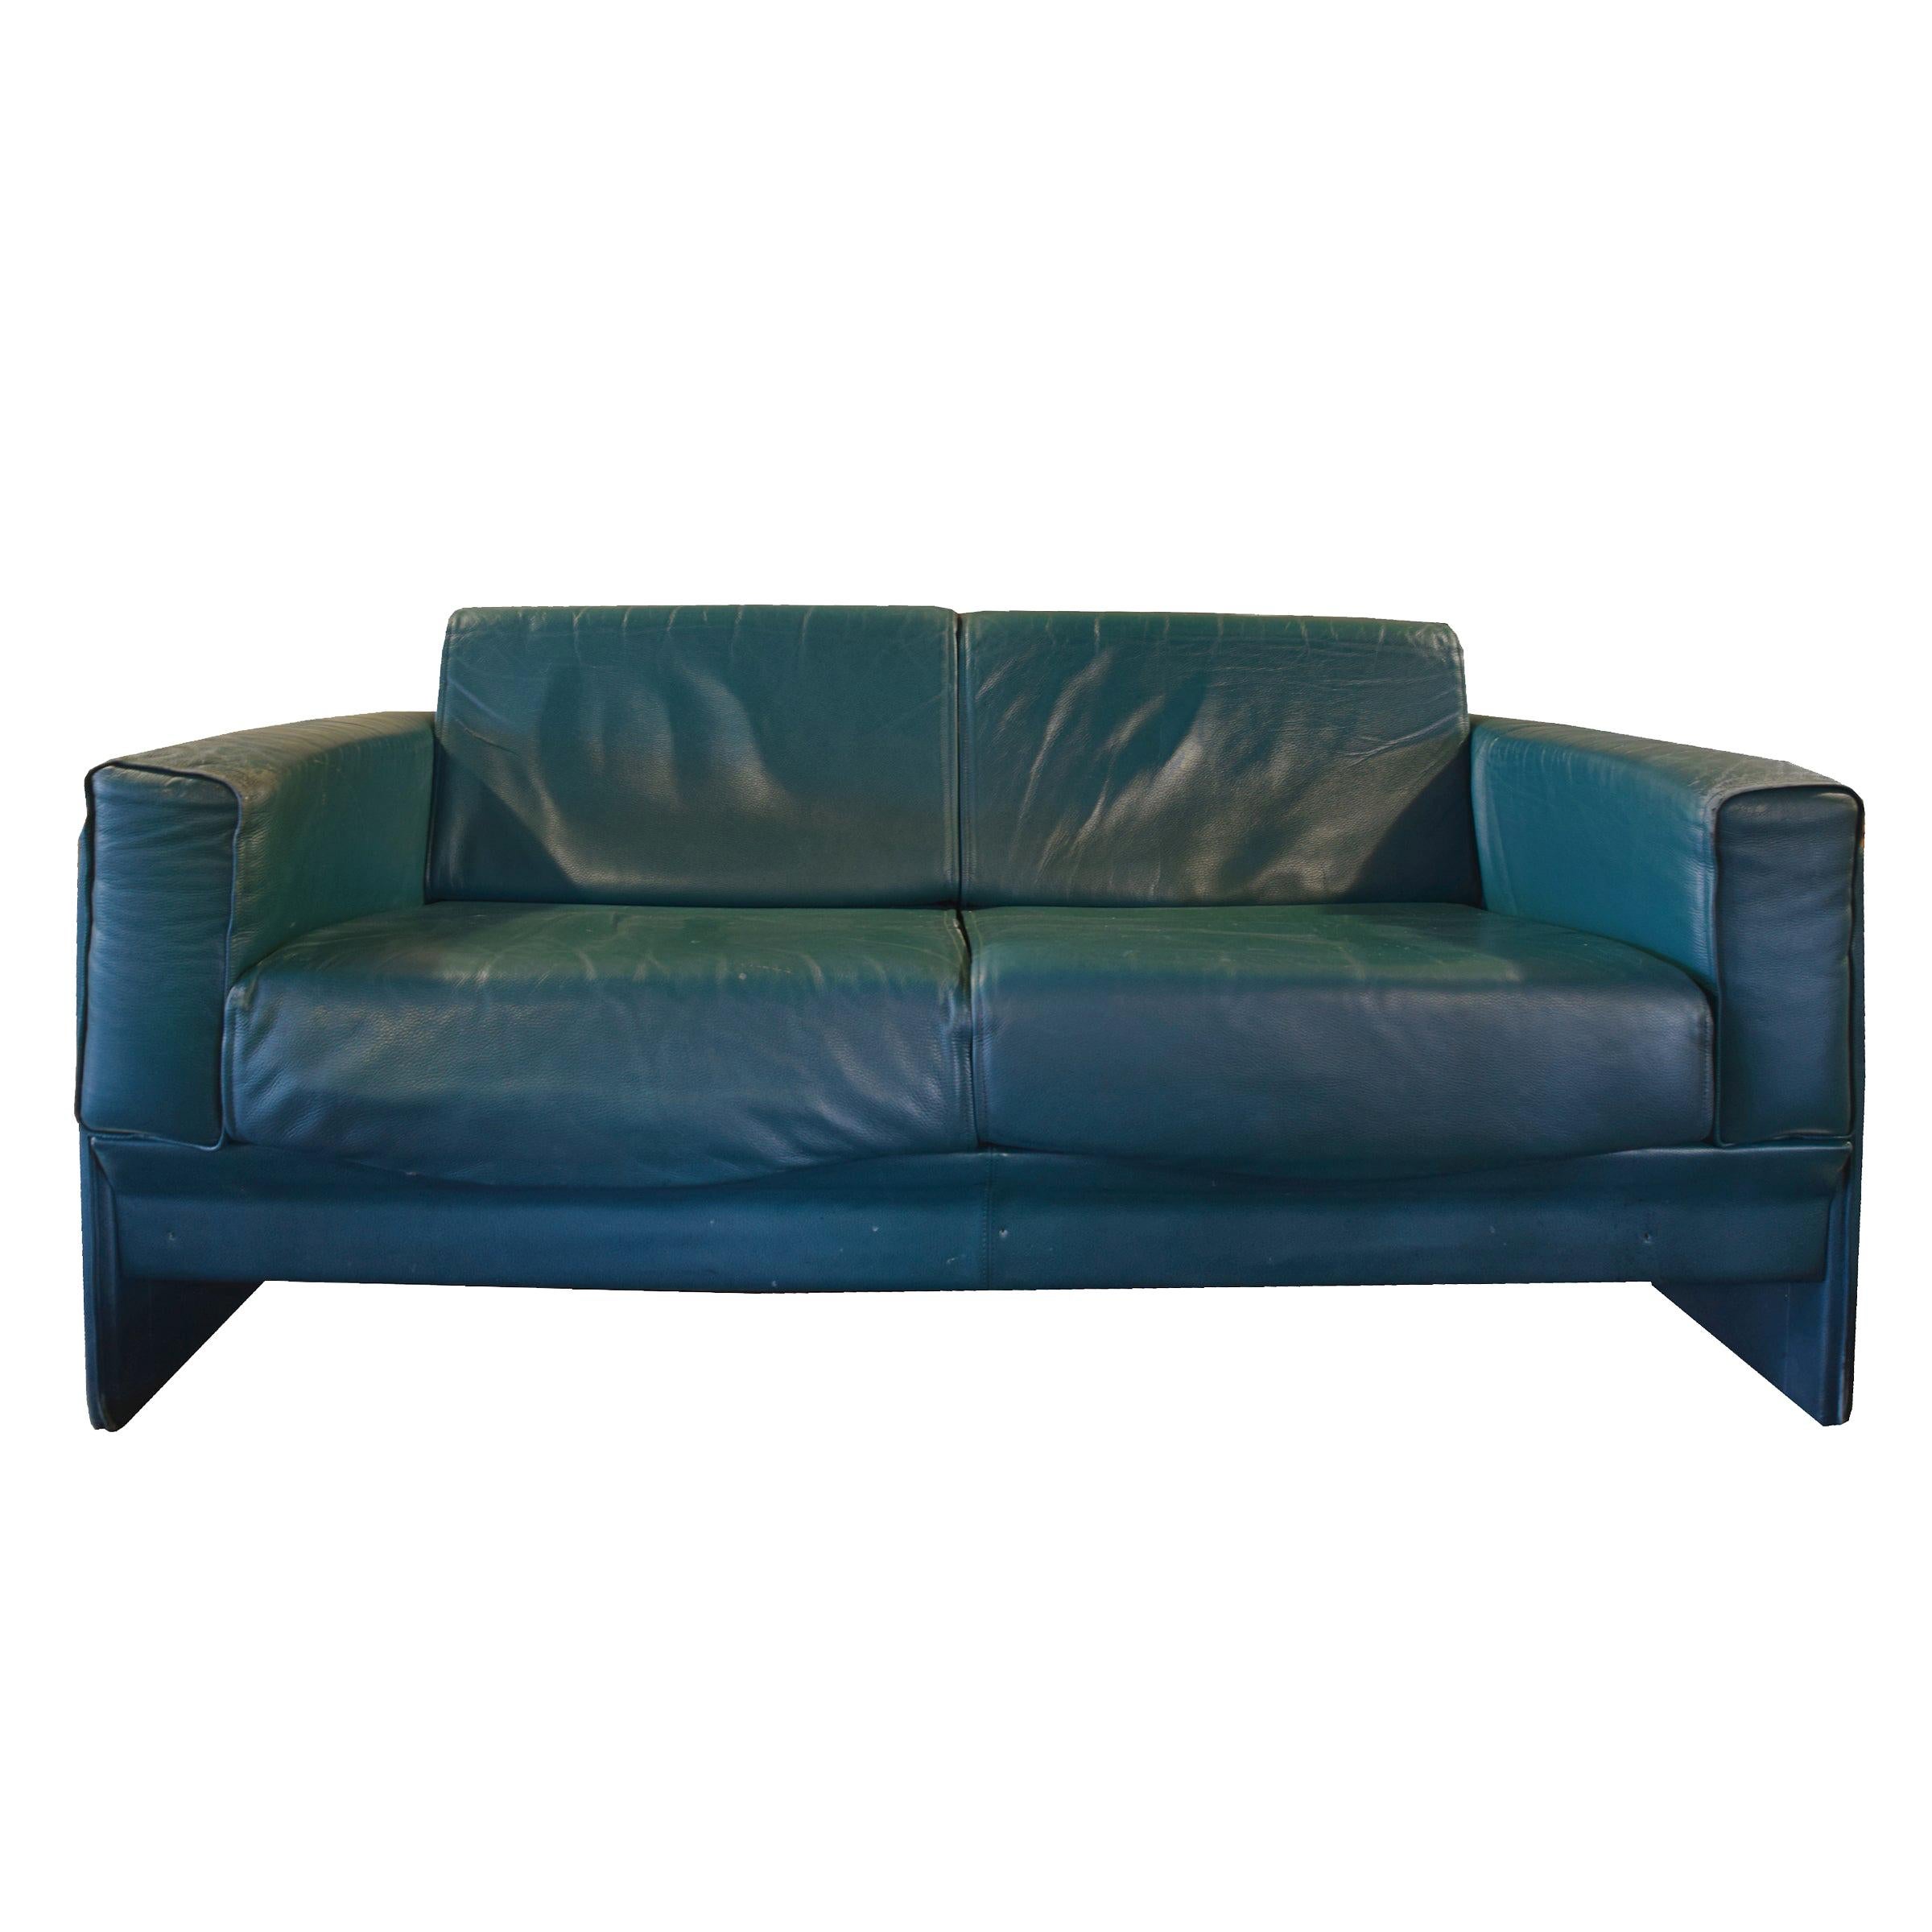 Italian Midcentury Leather Sofa For Sale